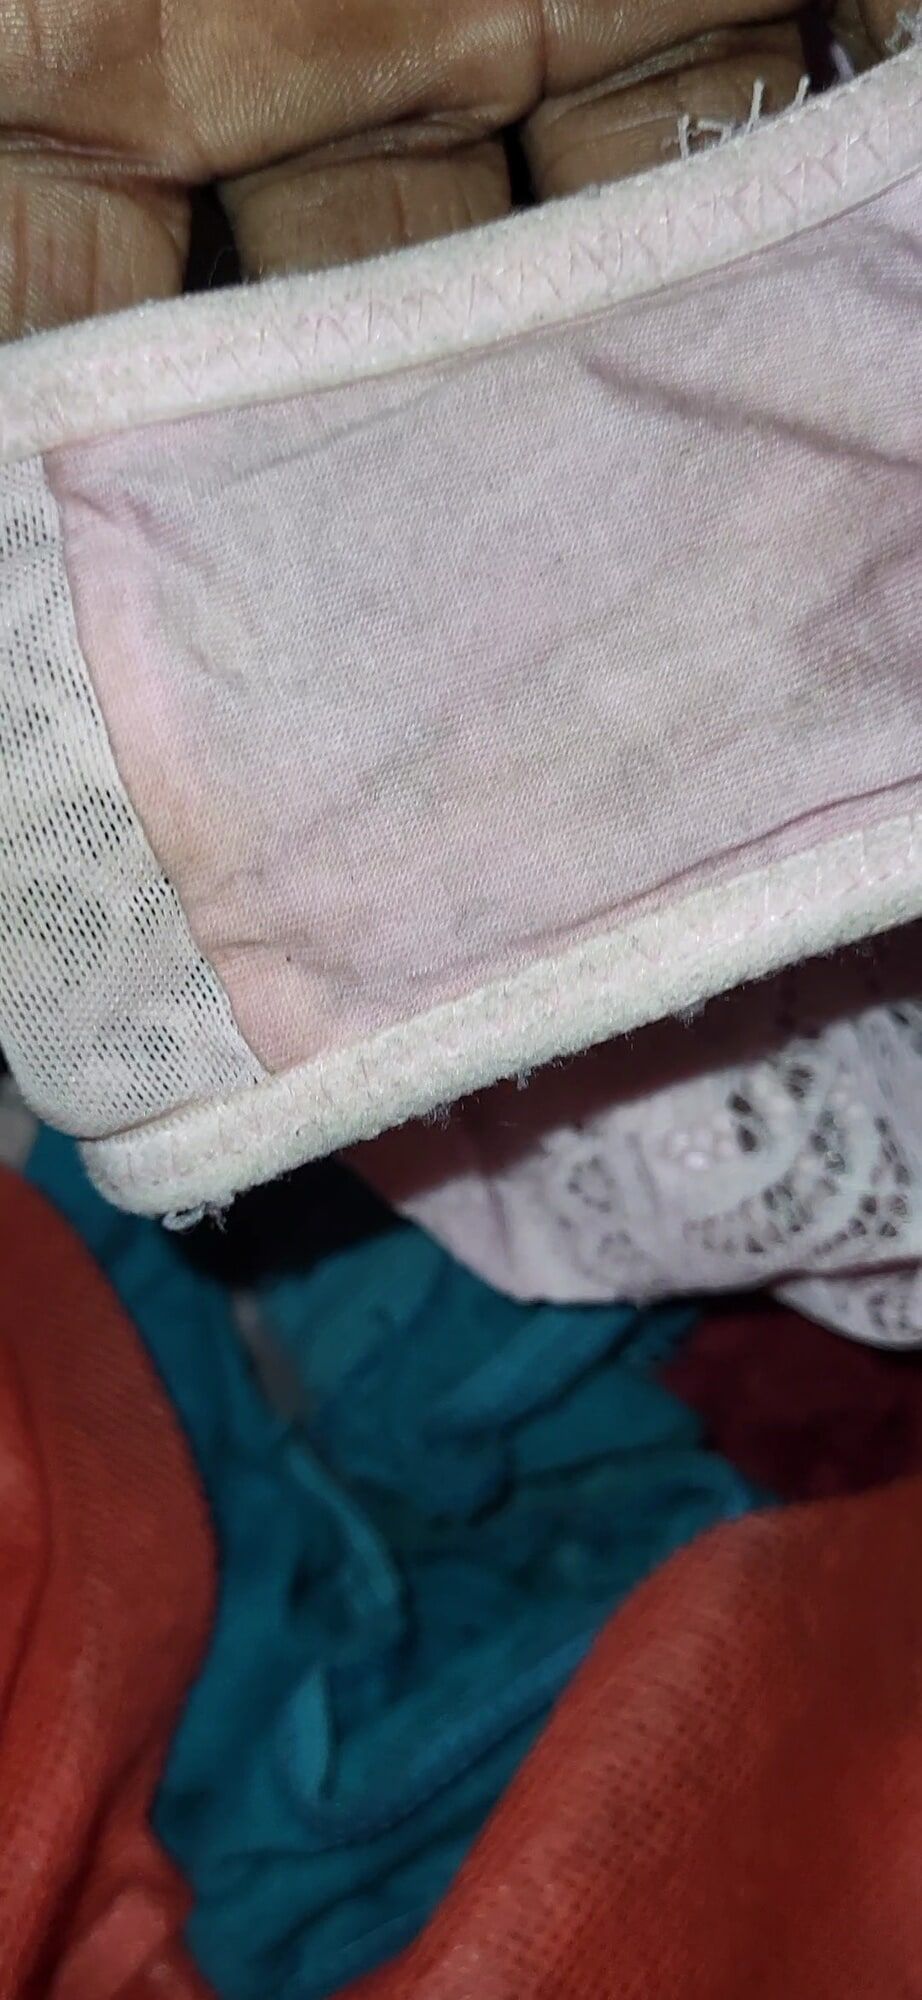 Wife's Dirty Panties Laundry Bag #3